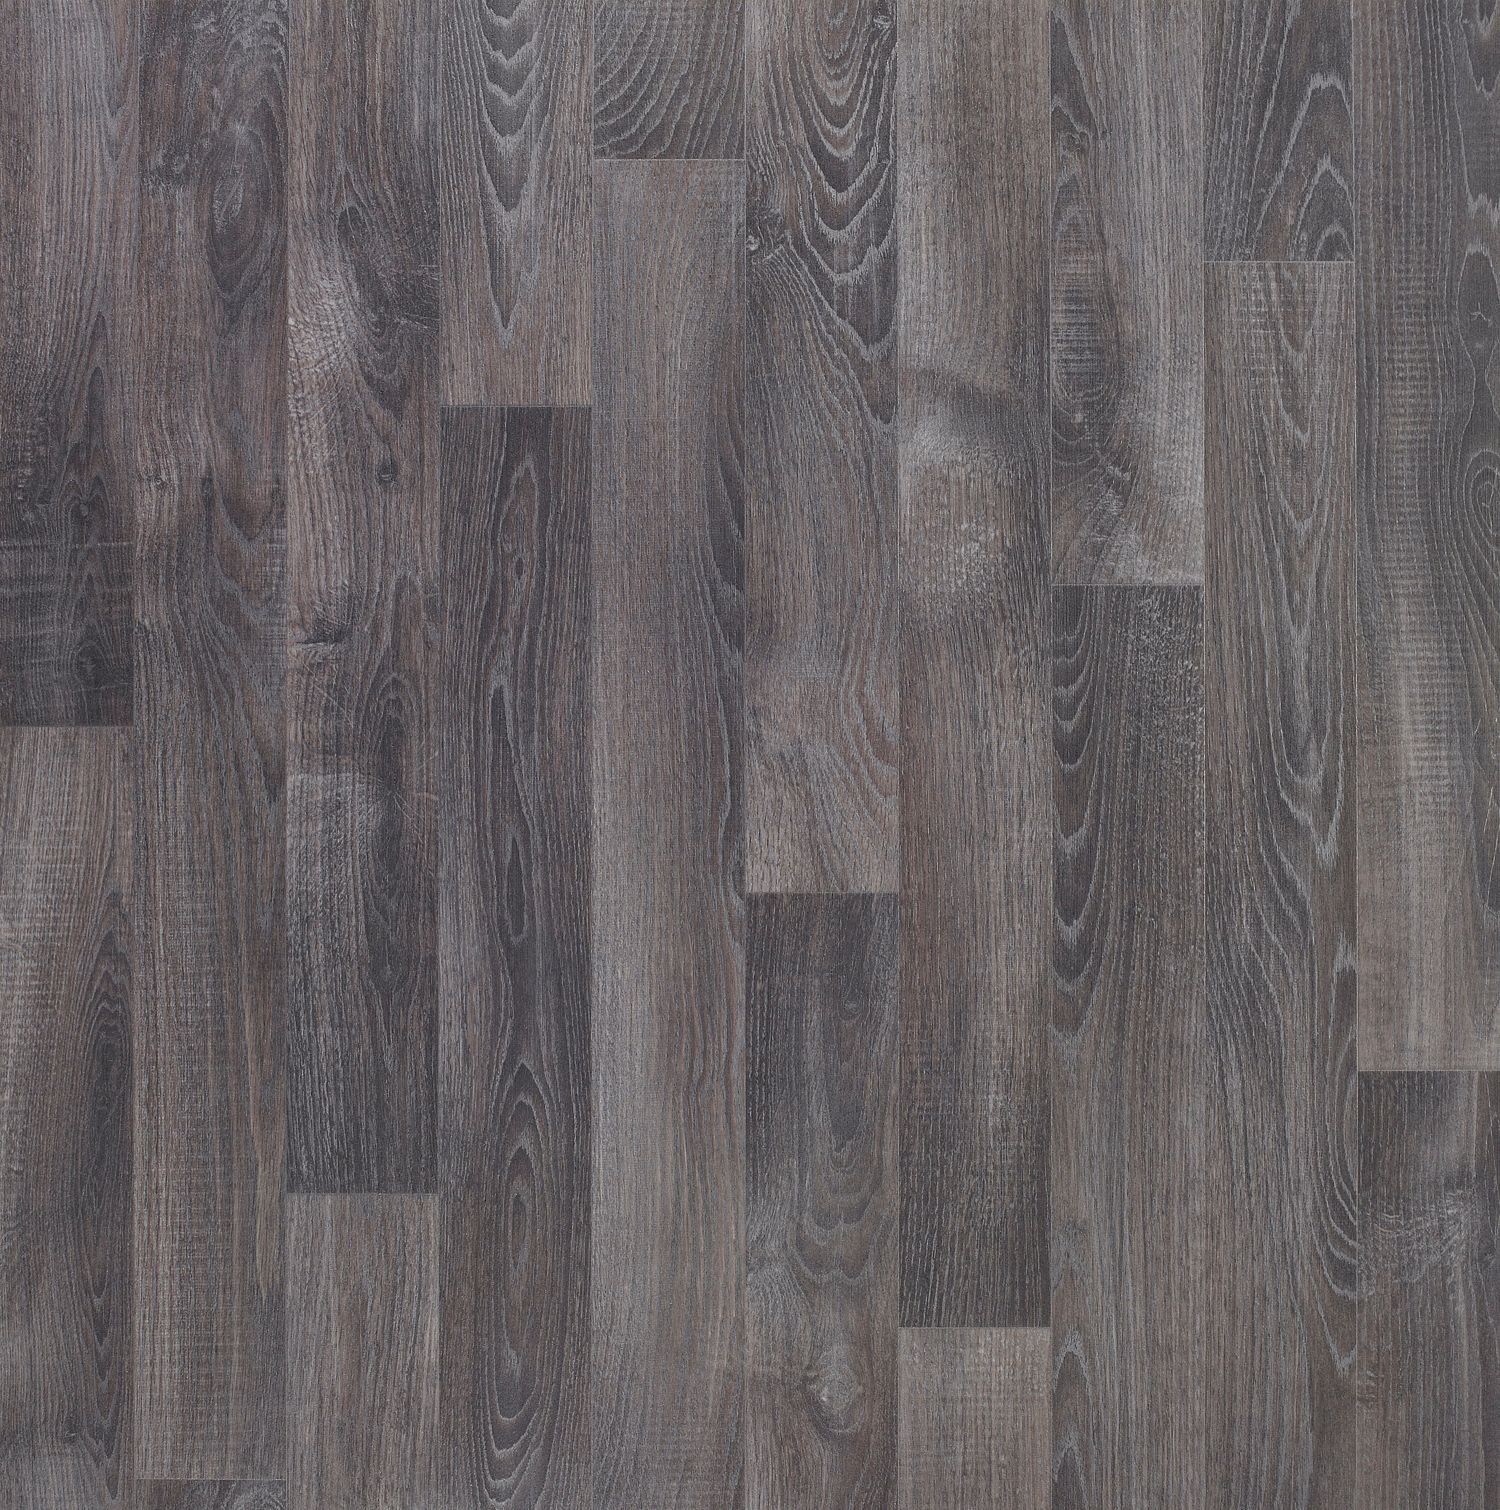 Dark Grey Oak Effect Vinyl Flooring 4m Departments Diy At B Q